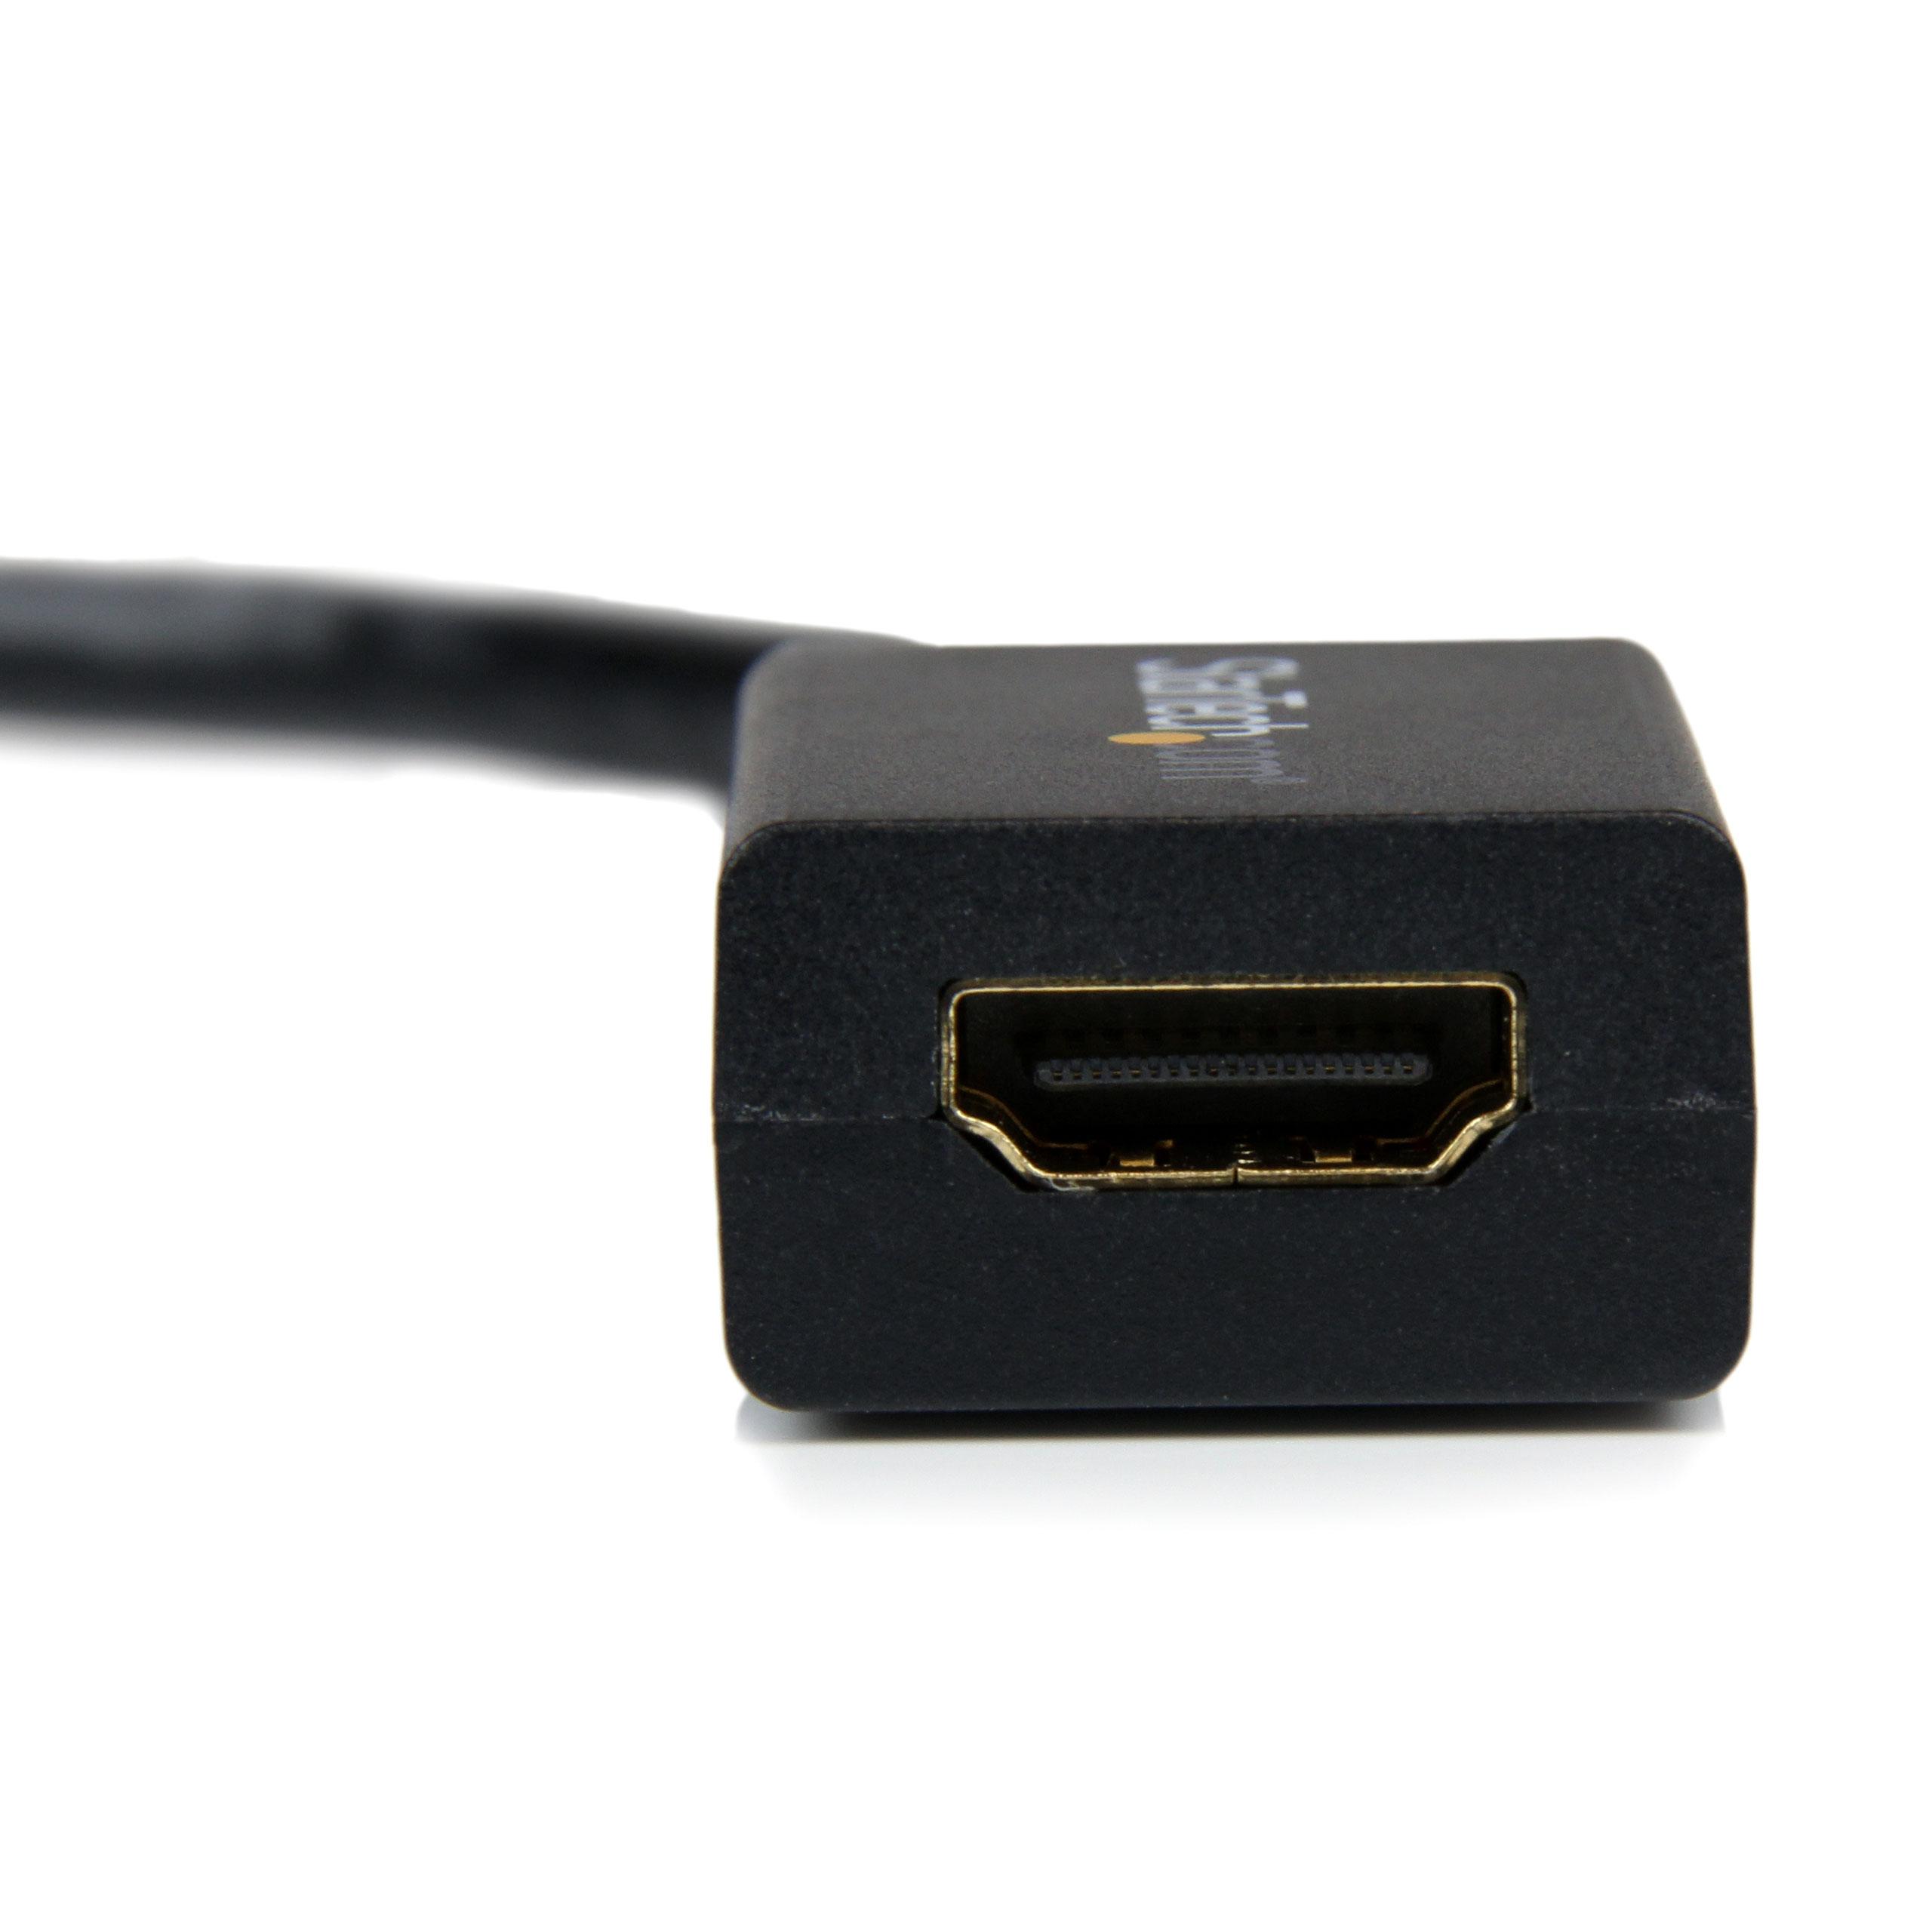 Cable adaptador HDMI hembra a DVI macho